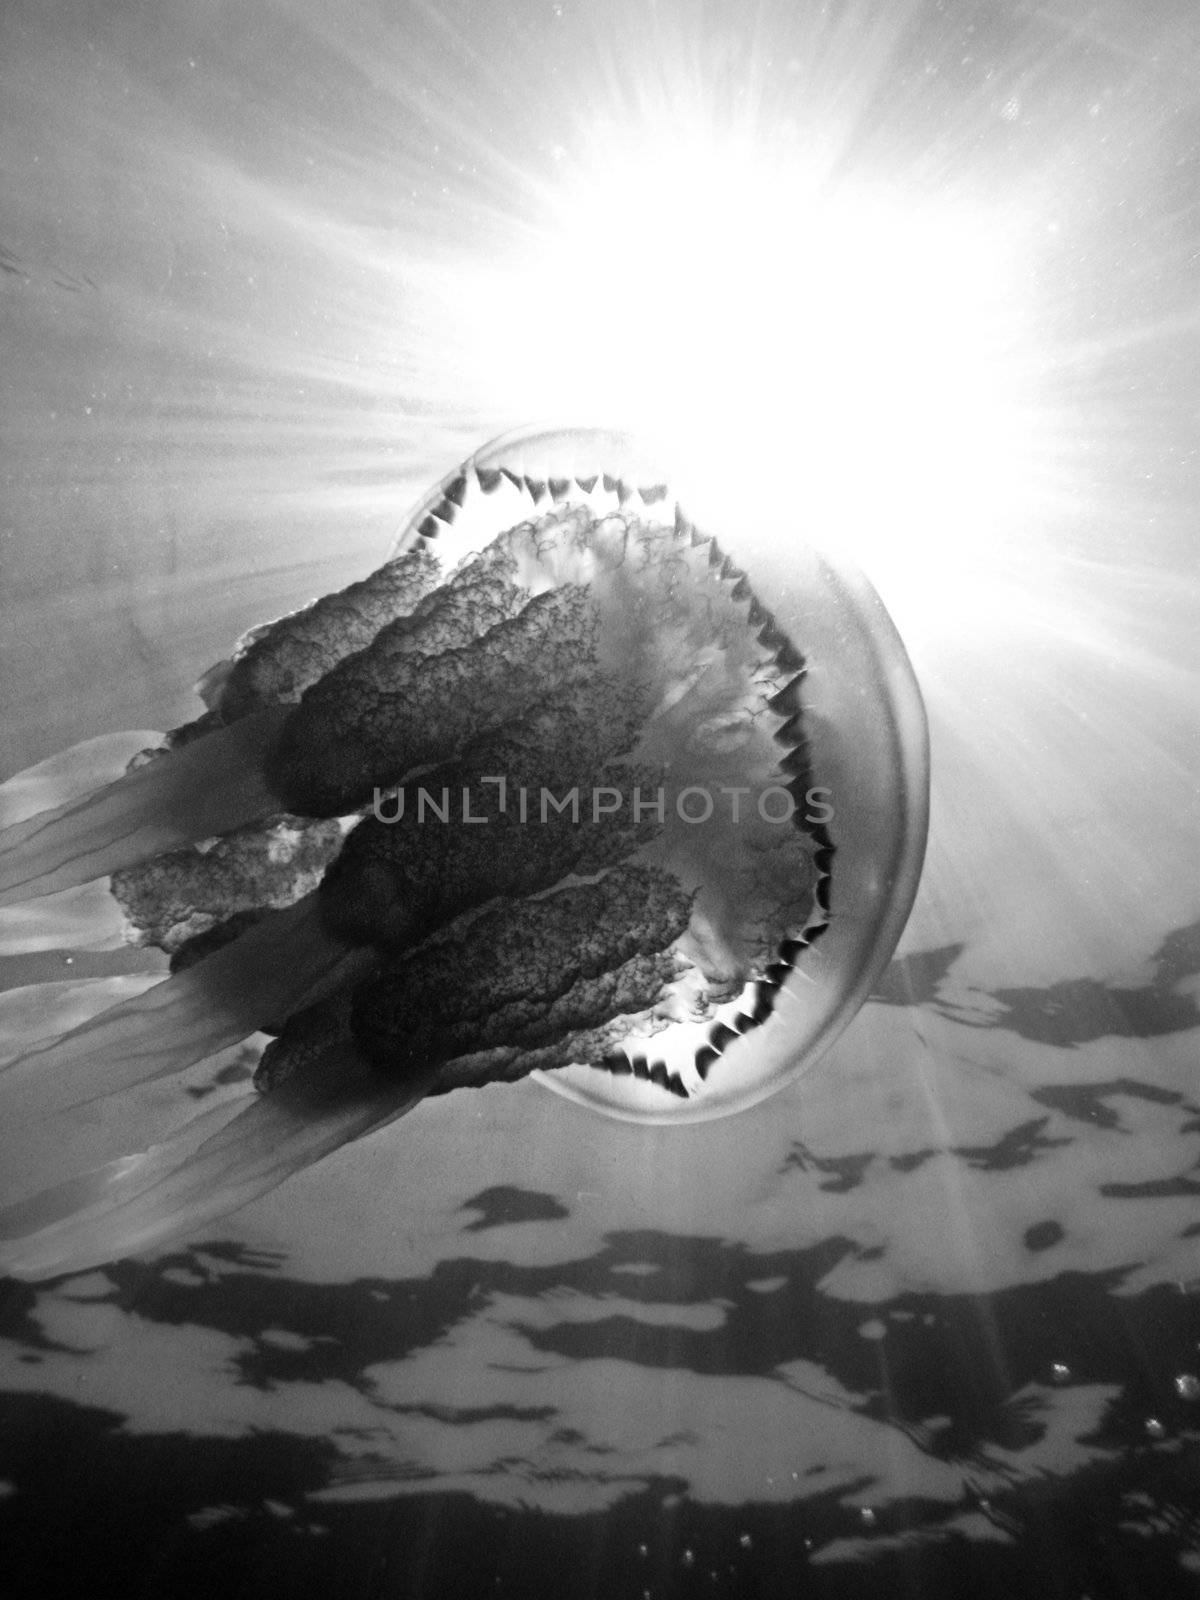 “ Rhizostoma Pulmo” Jellyfish in Black and white.